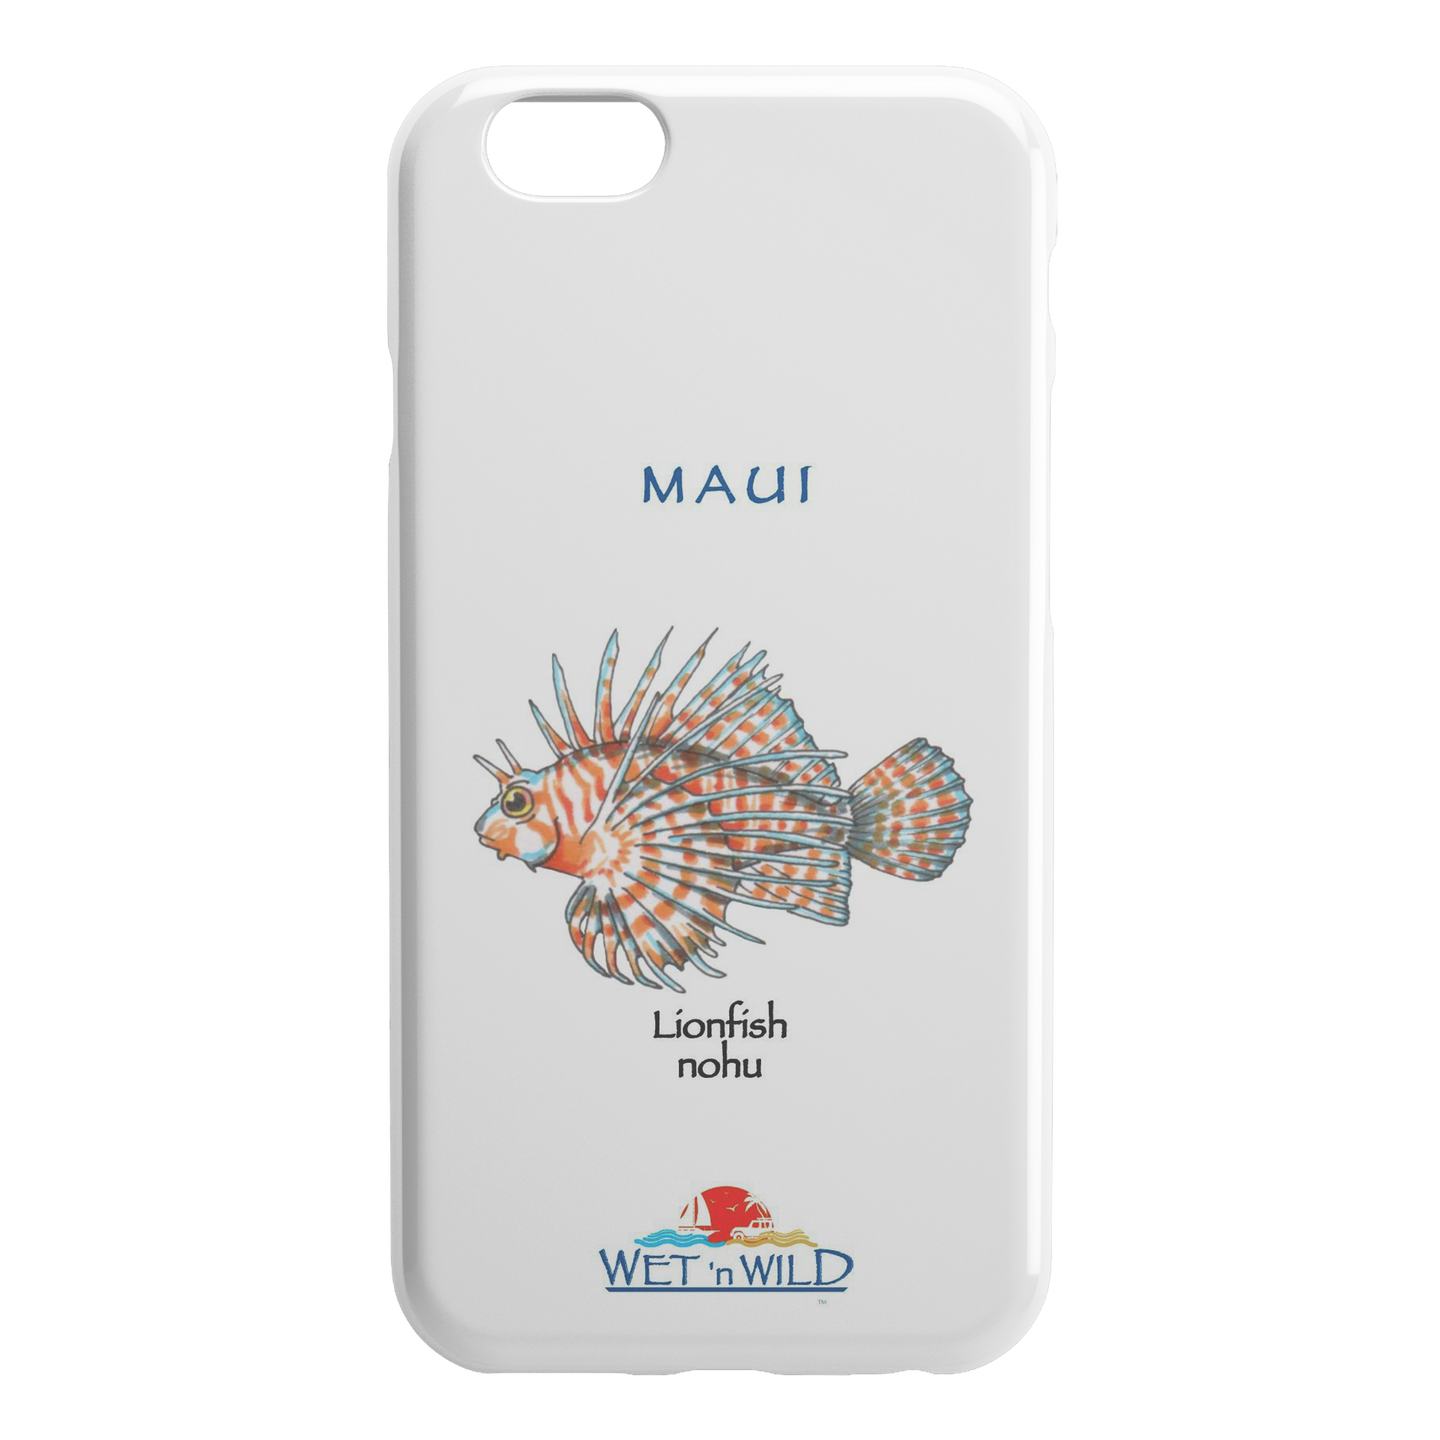 Maui iPhone Case - Lionfish